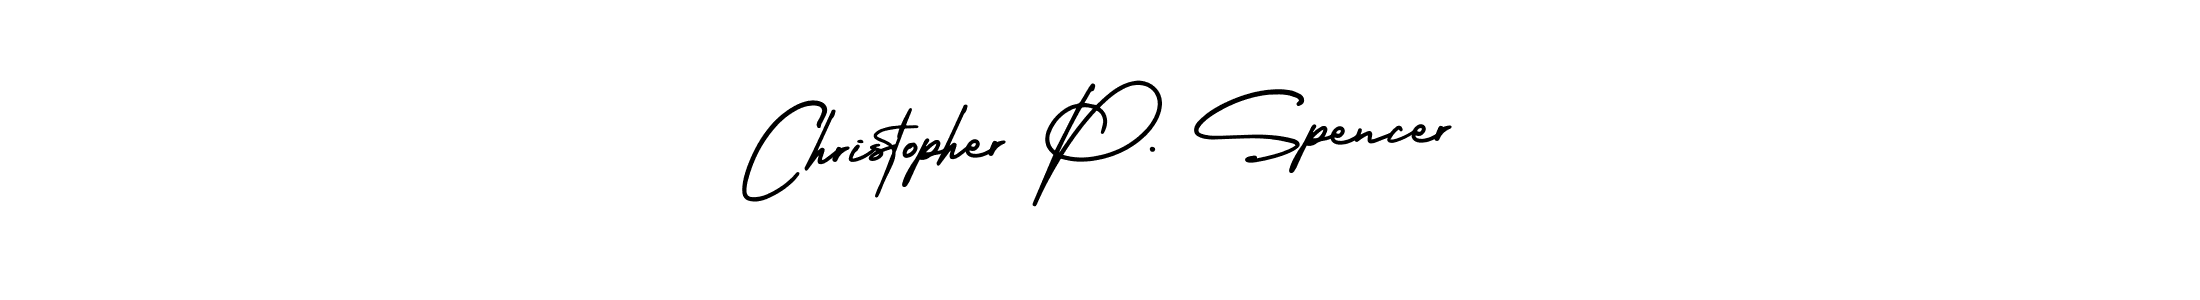 Best and Professional Signature Style for Christopher P. Spencer. AmerikaSignatureDemo-Regular Best Signature Style Collection. Christopher P. Spencer signature style 3 images and pictures png